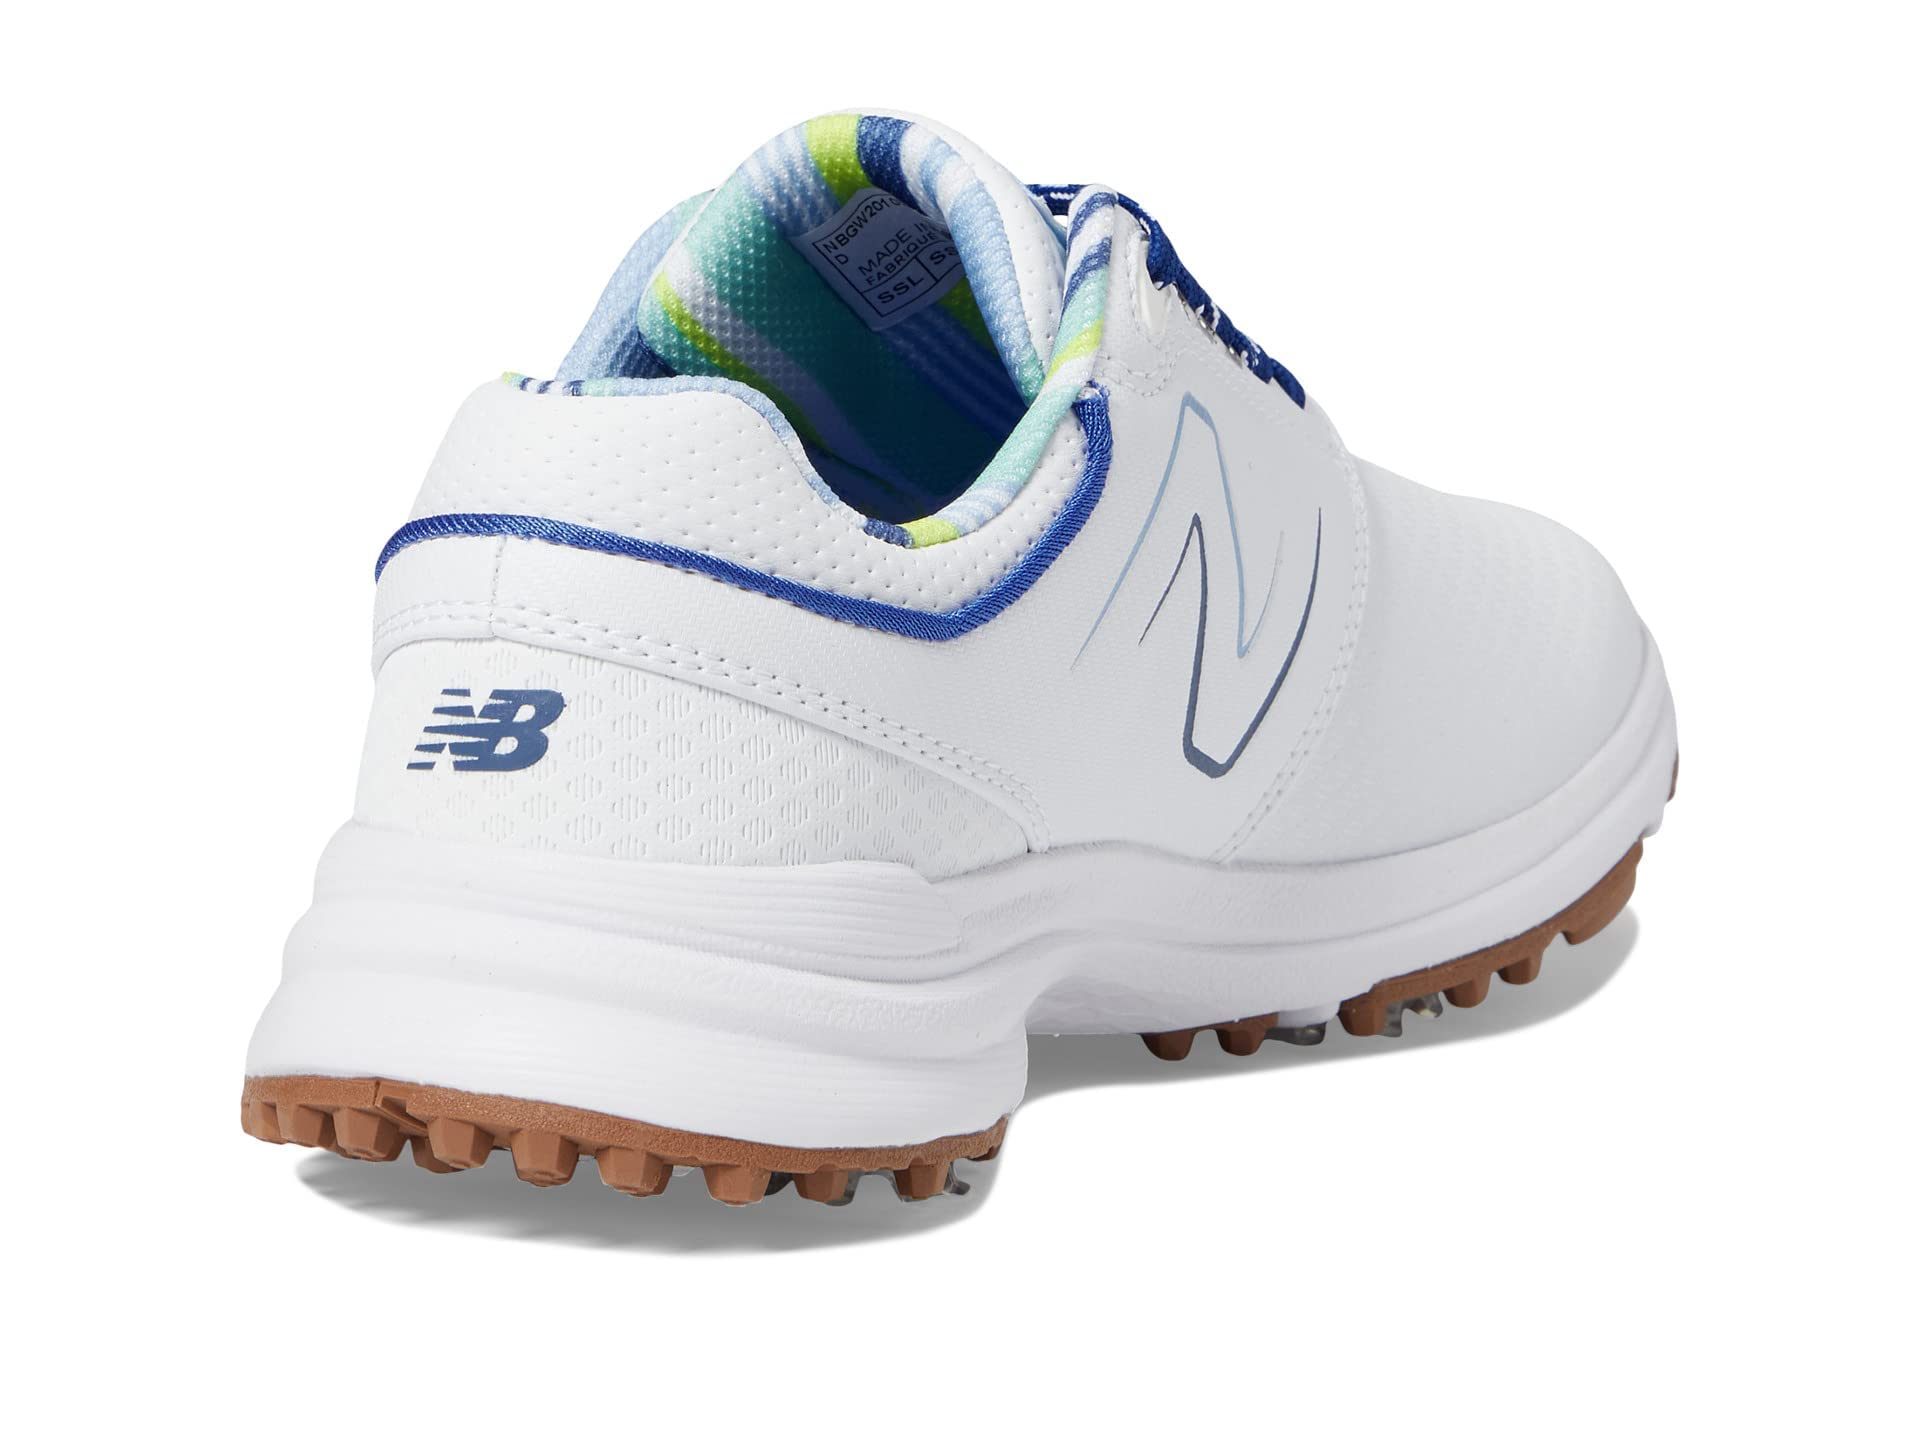 New Balance Women's Brighton Golf Shoes, White, 10.5 Wide